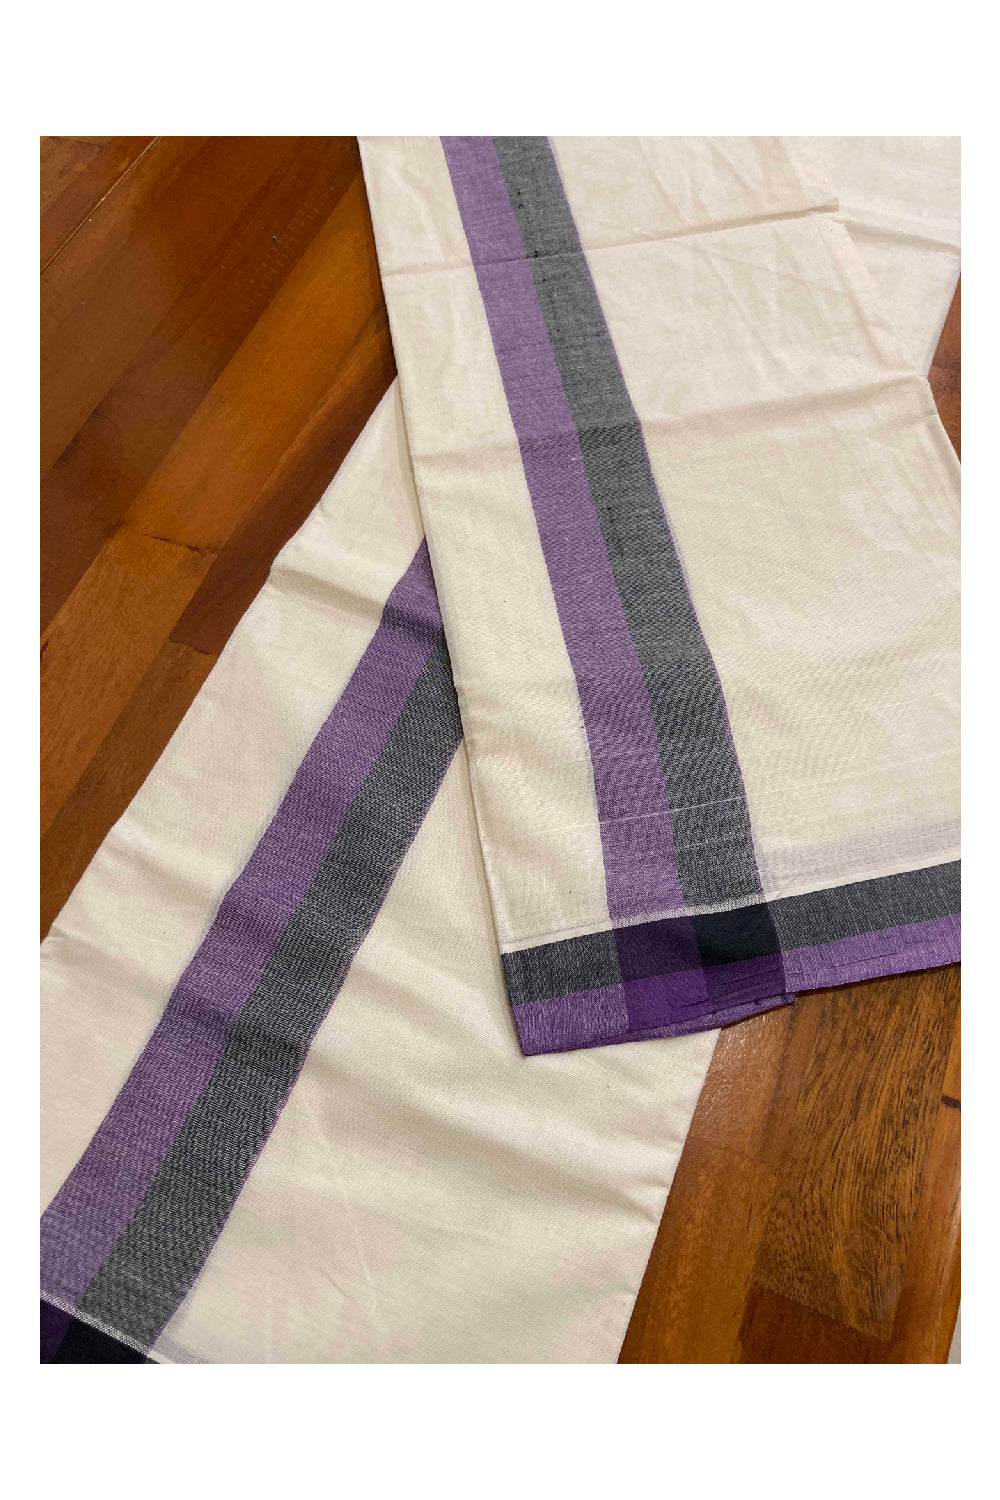 Kerala Cotton Mundum Neriyathum Single (Set Mundu) with Mulloth Design Purple and Black Border (Extra Soft Cotton)